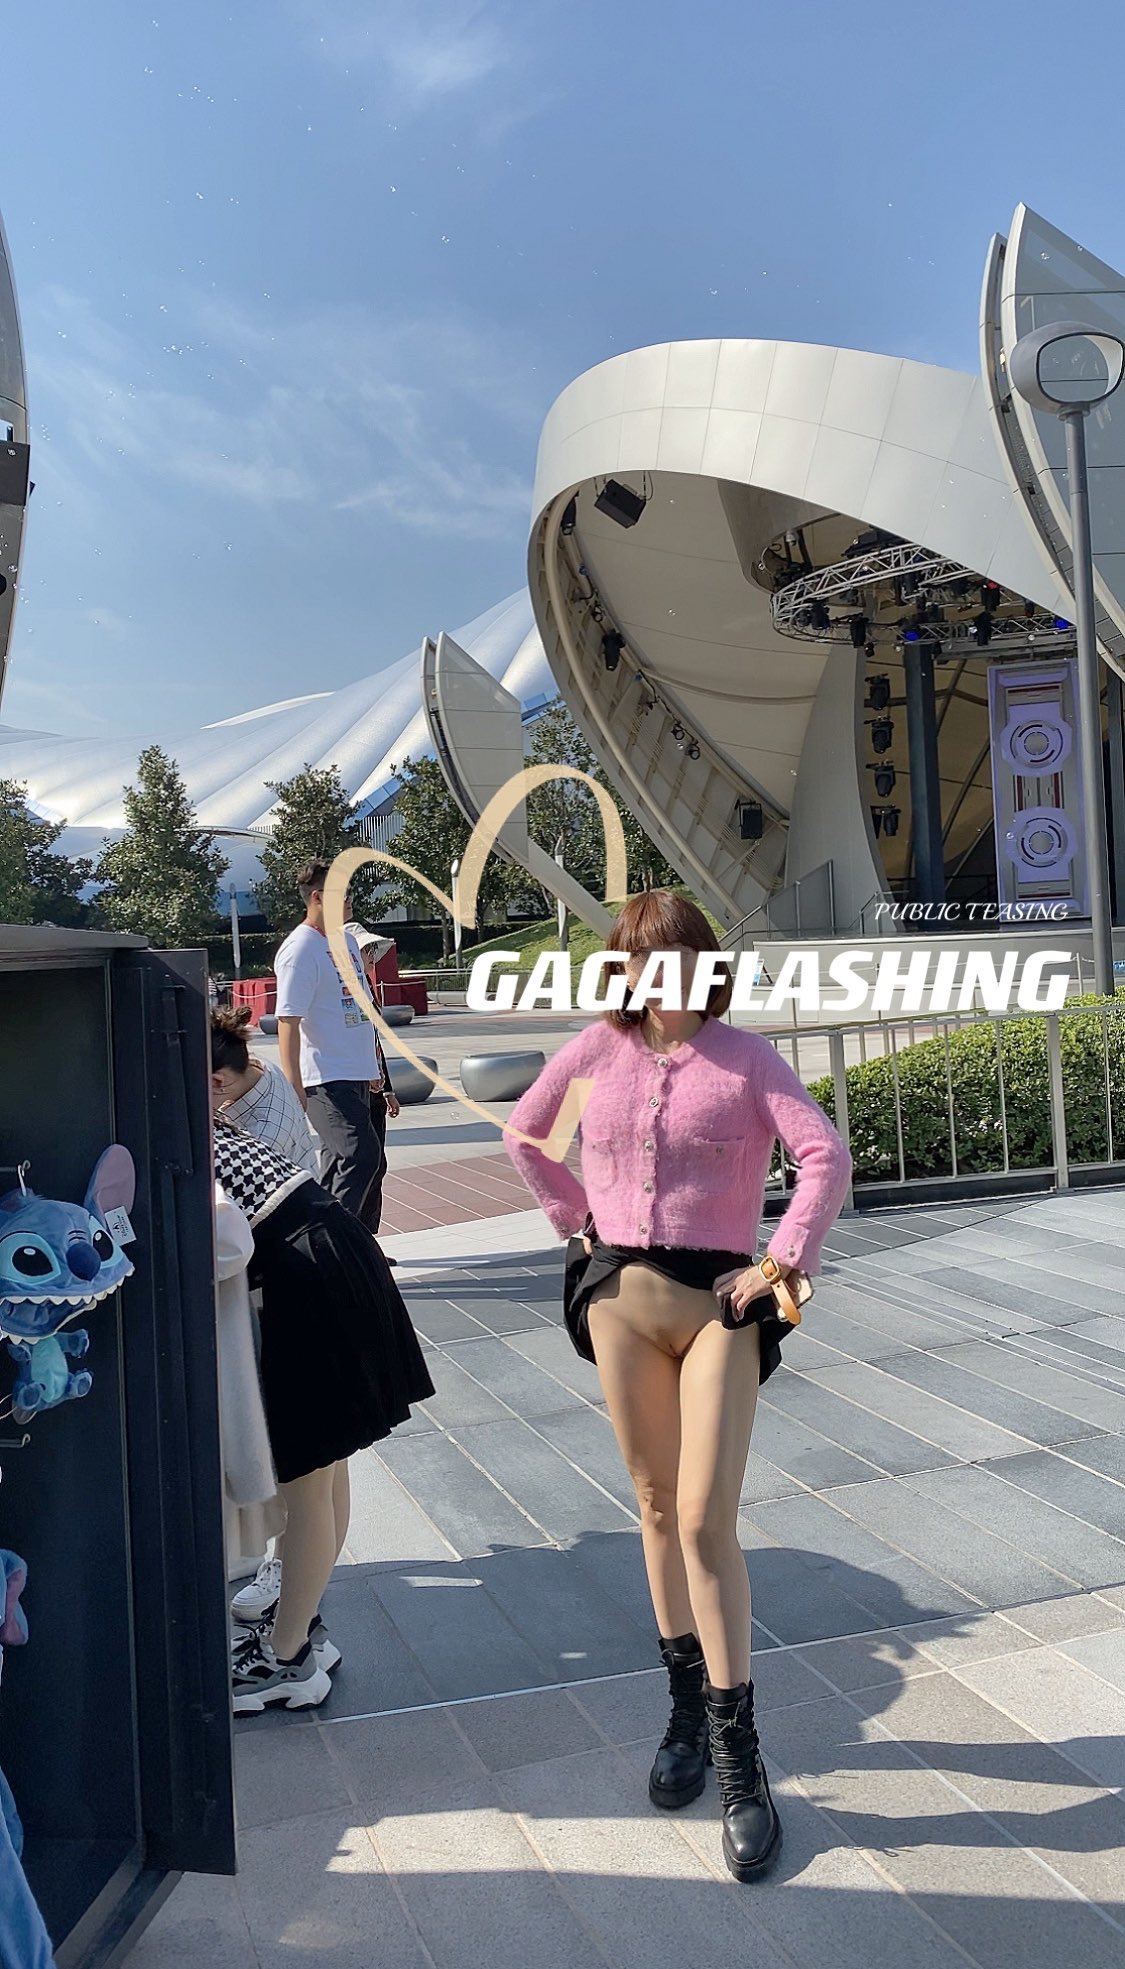 TW Pornstars - 3 pic. Gagaflashing…460K. Twitter. Disneyland adventure.  12:43 PM - 11 Jun 2021